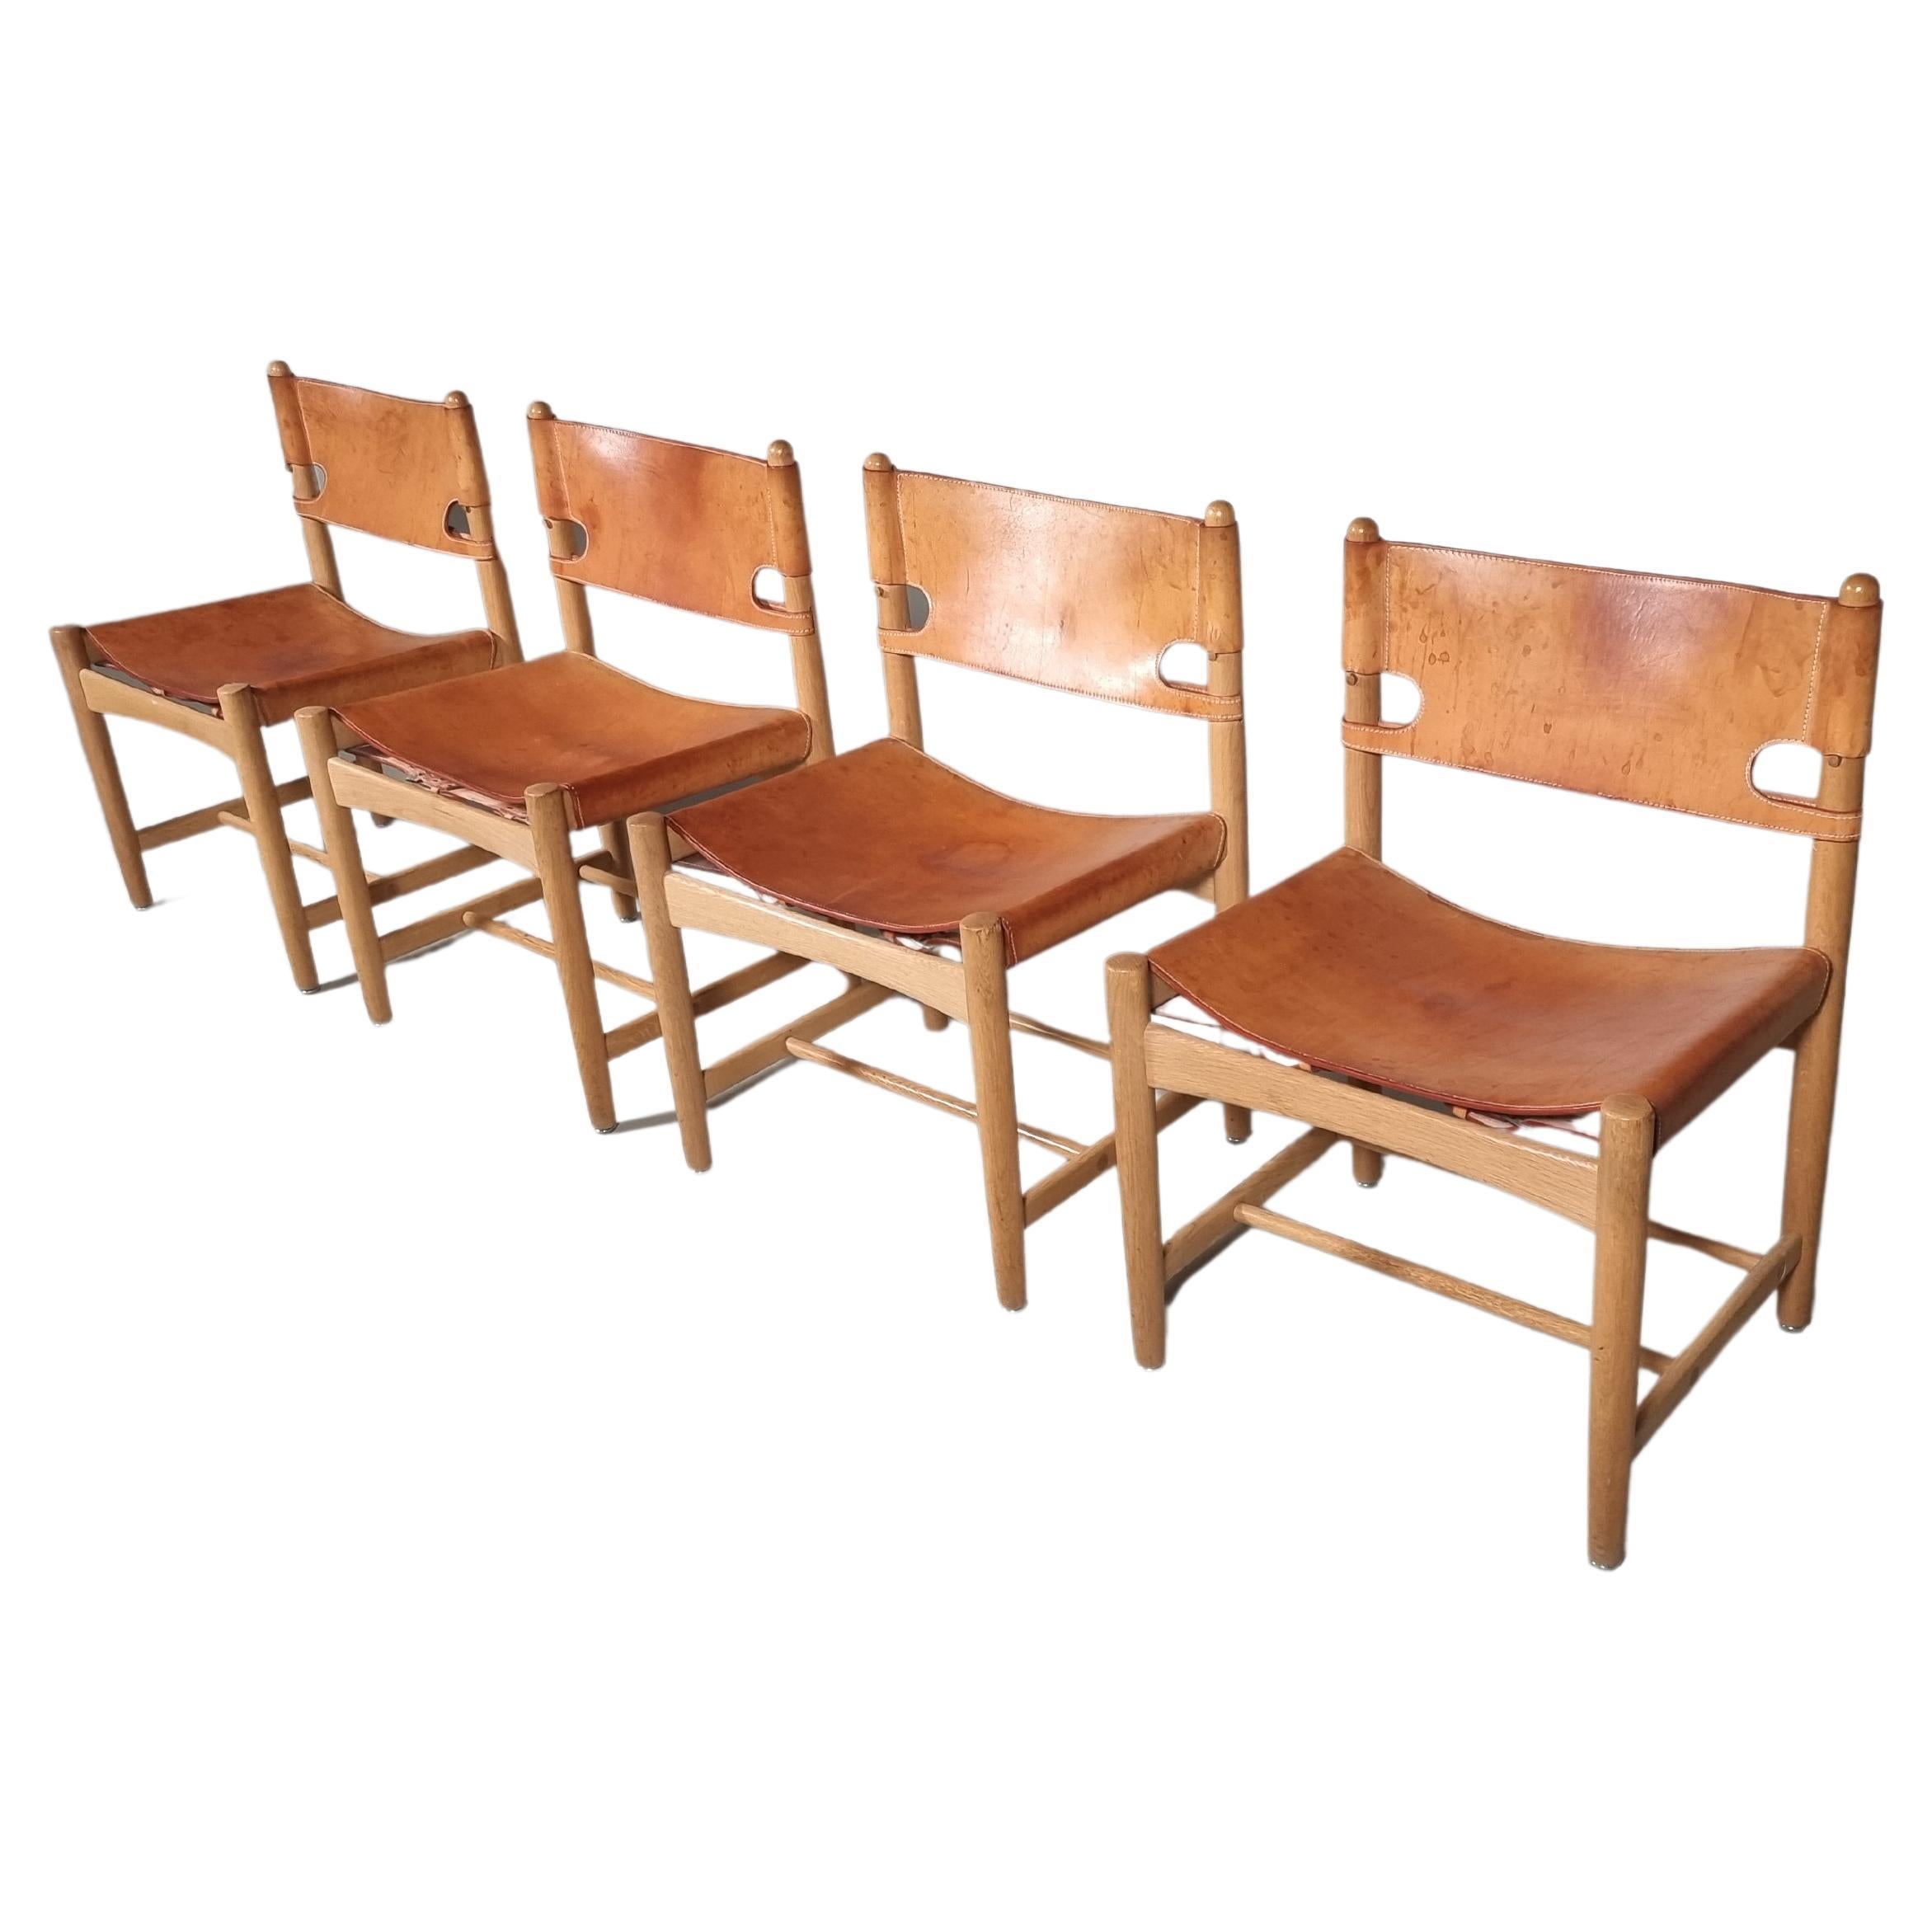 Borge Mogensen Furniture: Sofas, Spanish Chairs, & More - 704 For 